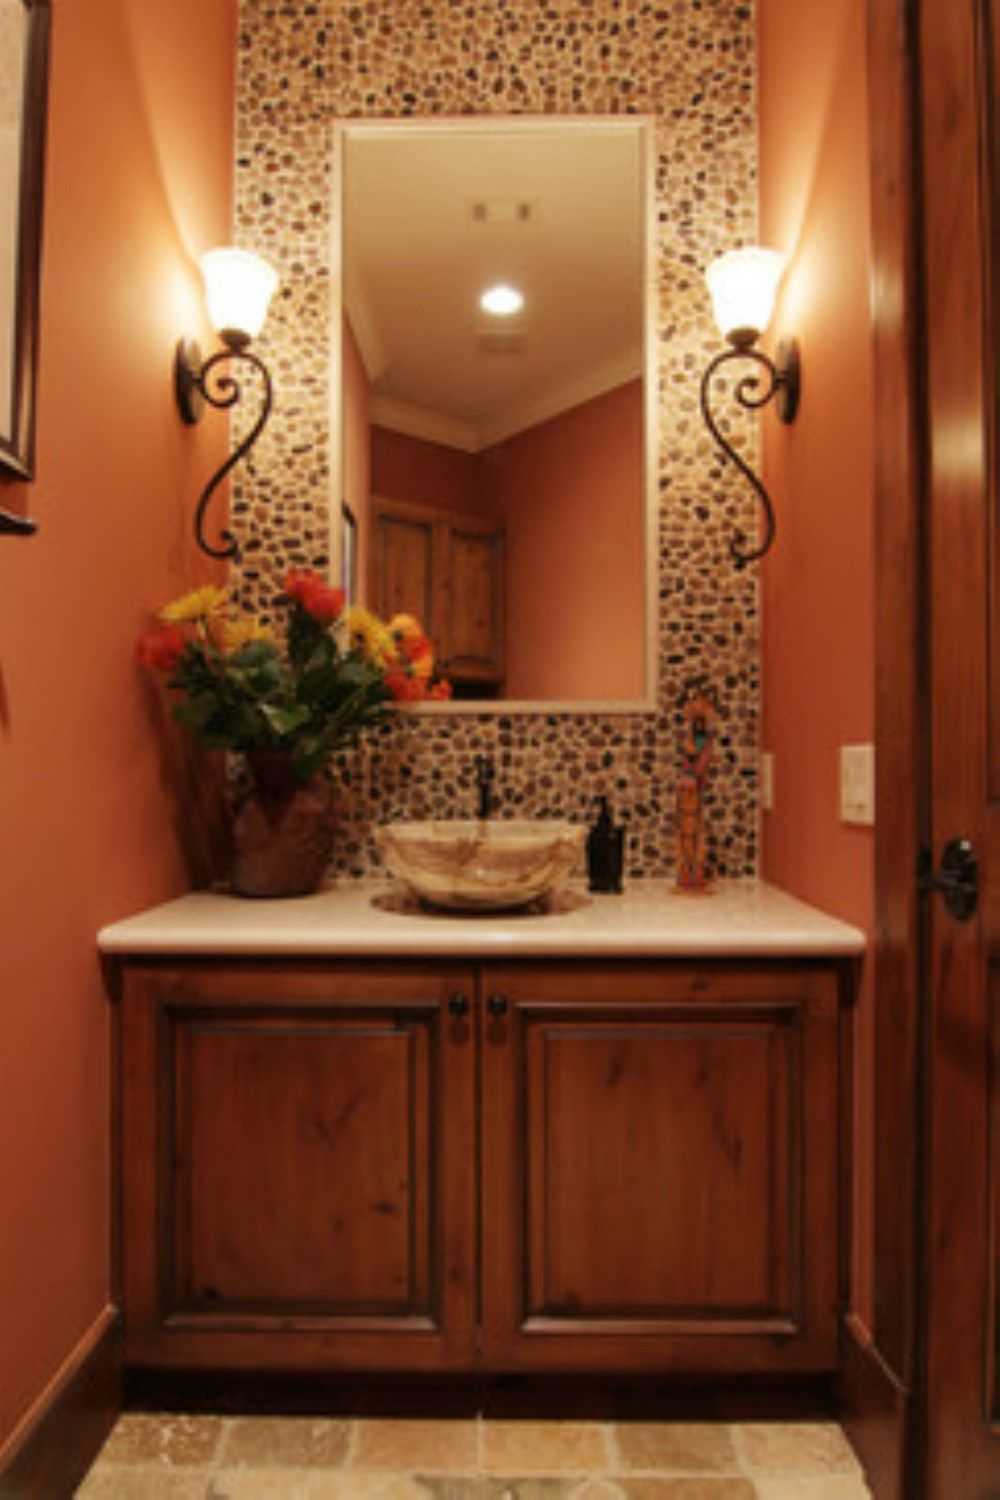 Bathroom Mirror Ideas 3. Small Tuscan Bathroom with Frameless Mirror - Harptimes.com